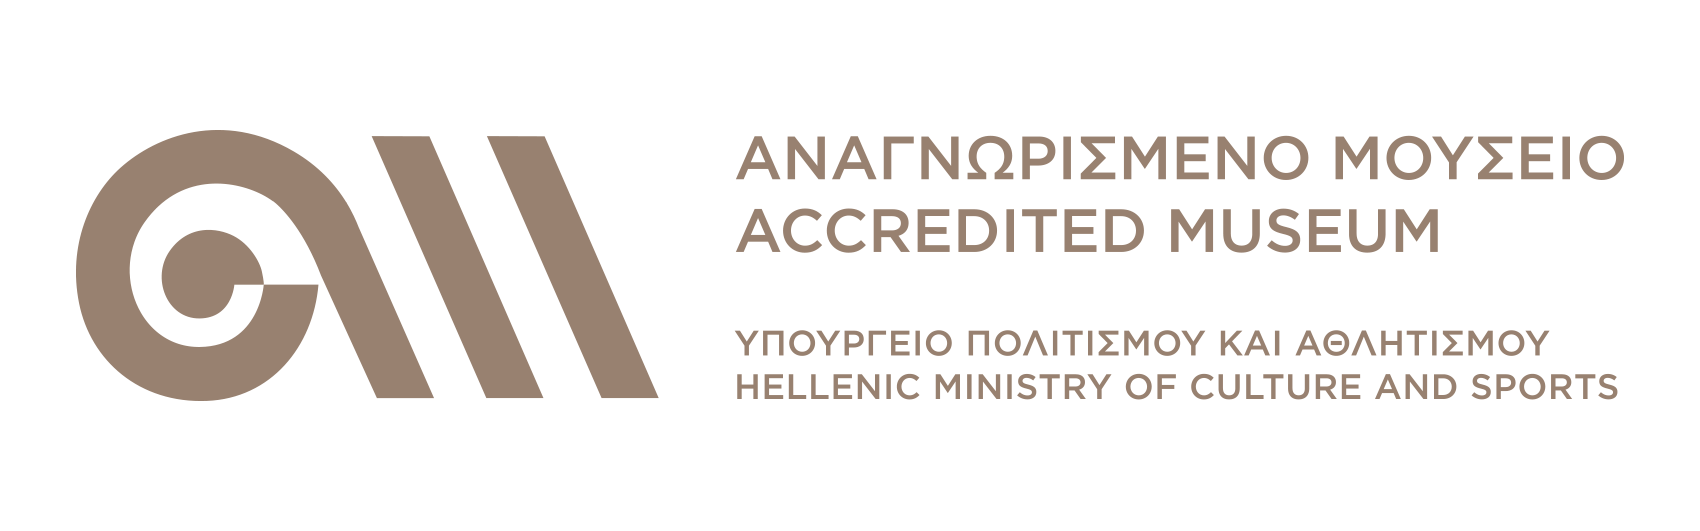 accredited_museum